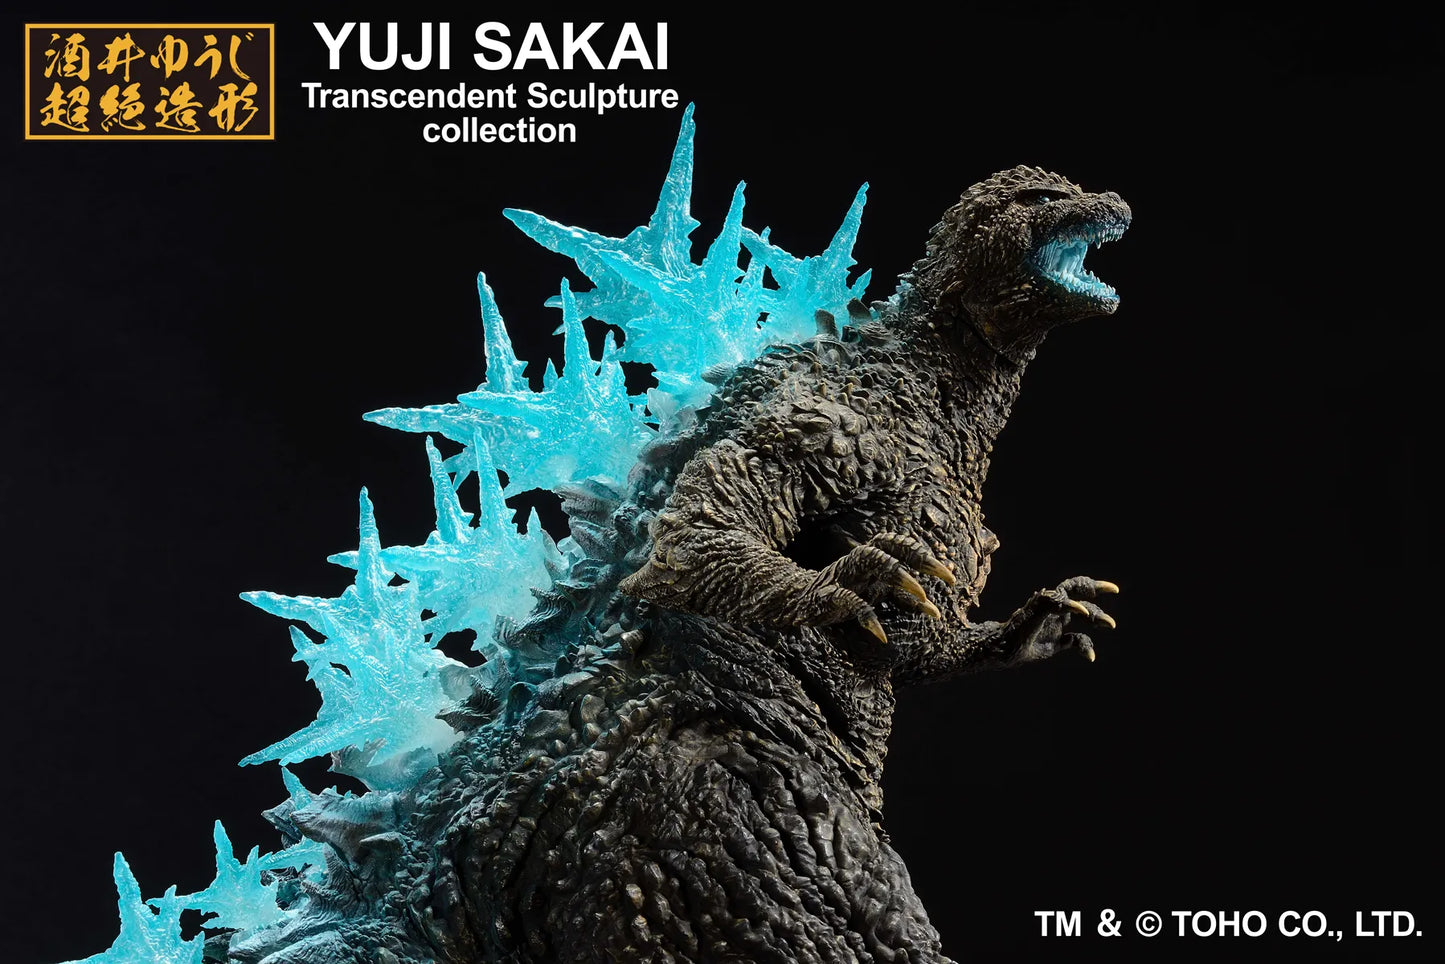 Pre Order Godzilla (2023) - Heat Ray ver. - "Godzilla Minus One", Ichibansho Figure